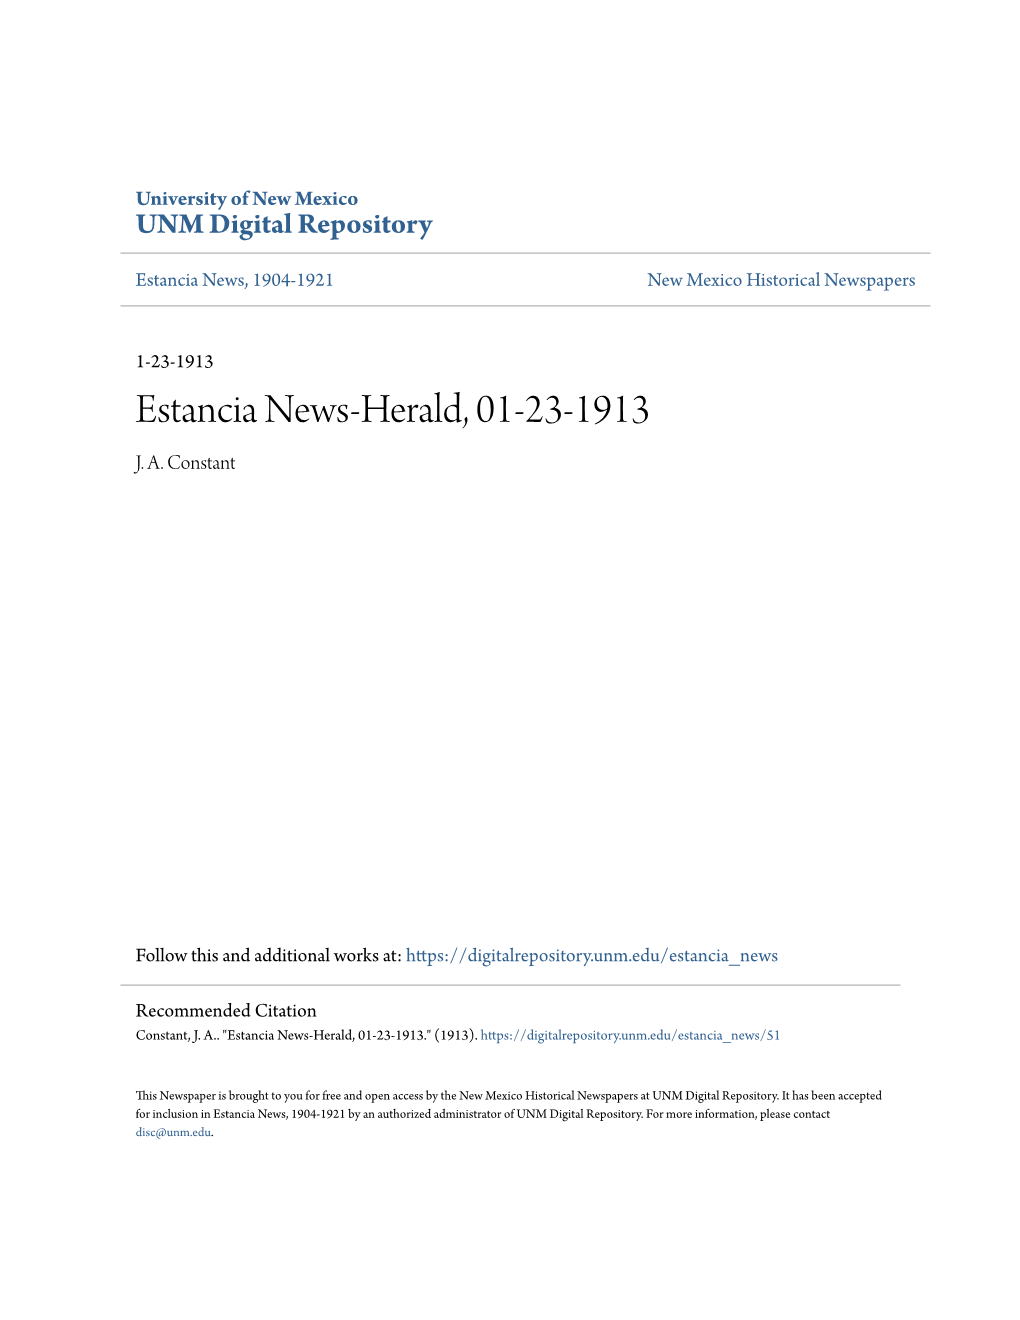 Estancia News-Herald, 01-23-1913 J